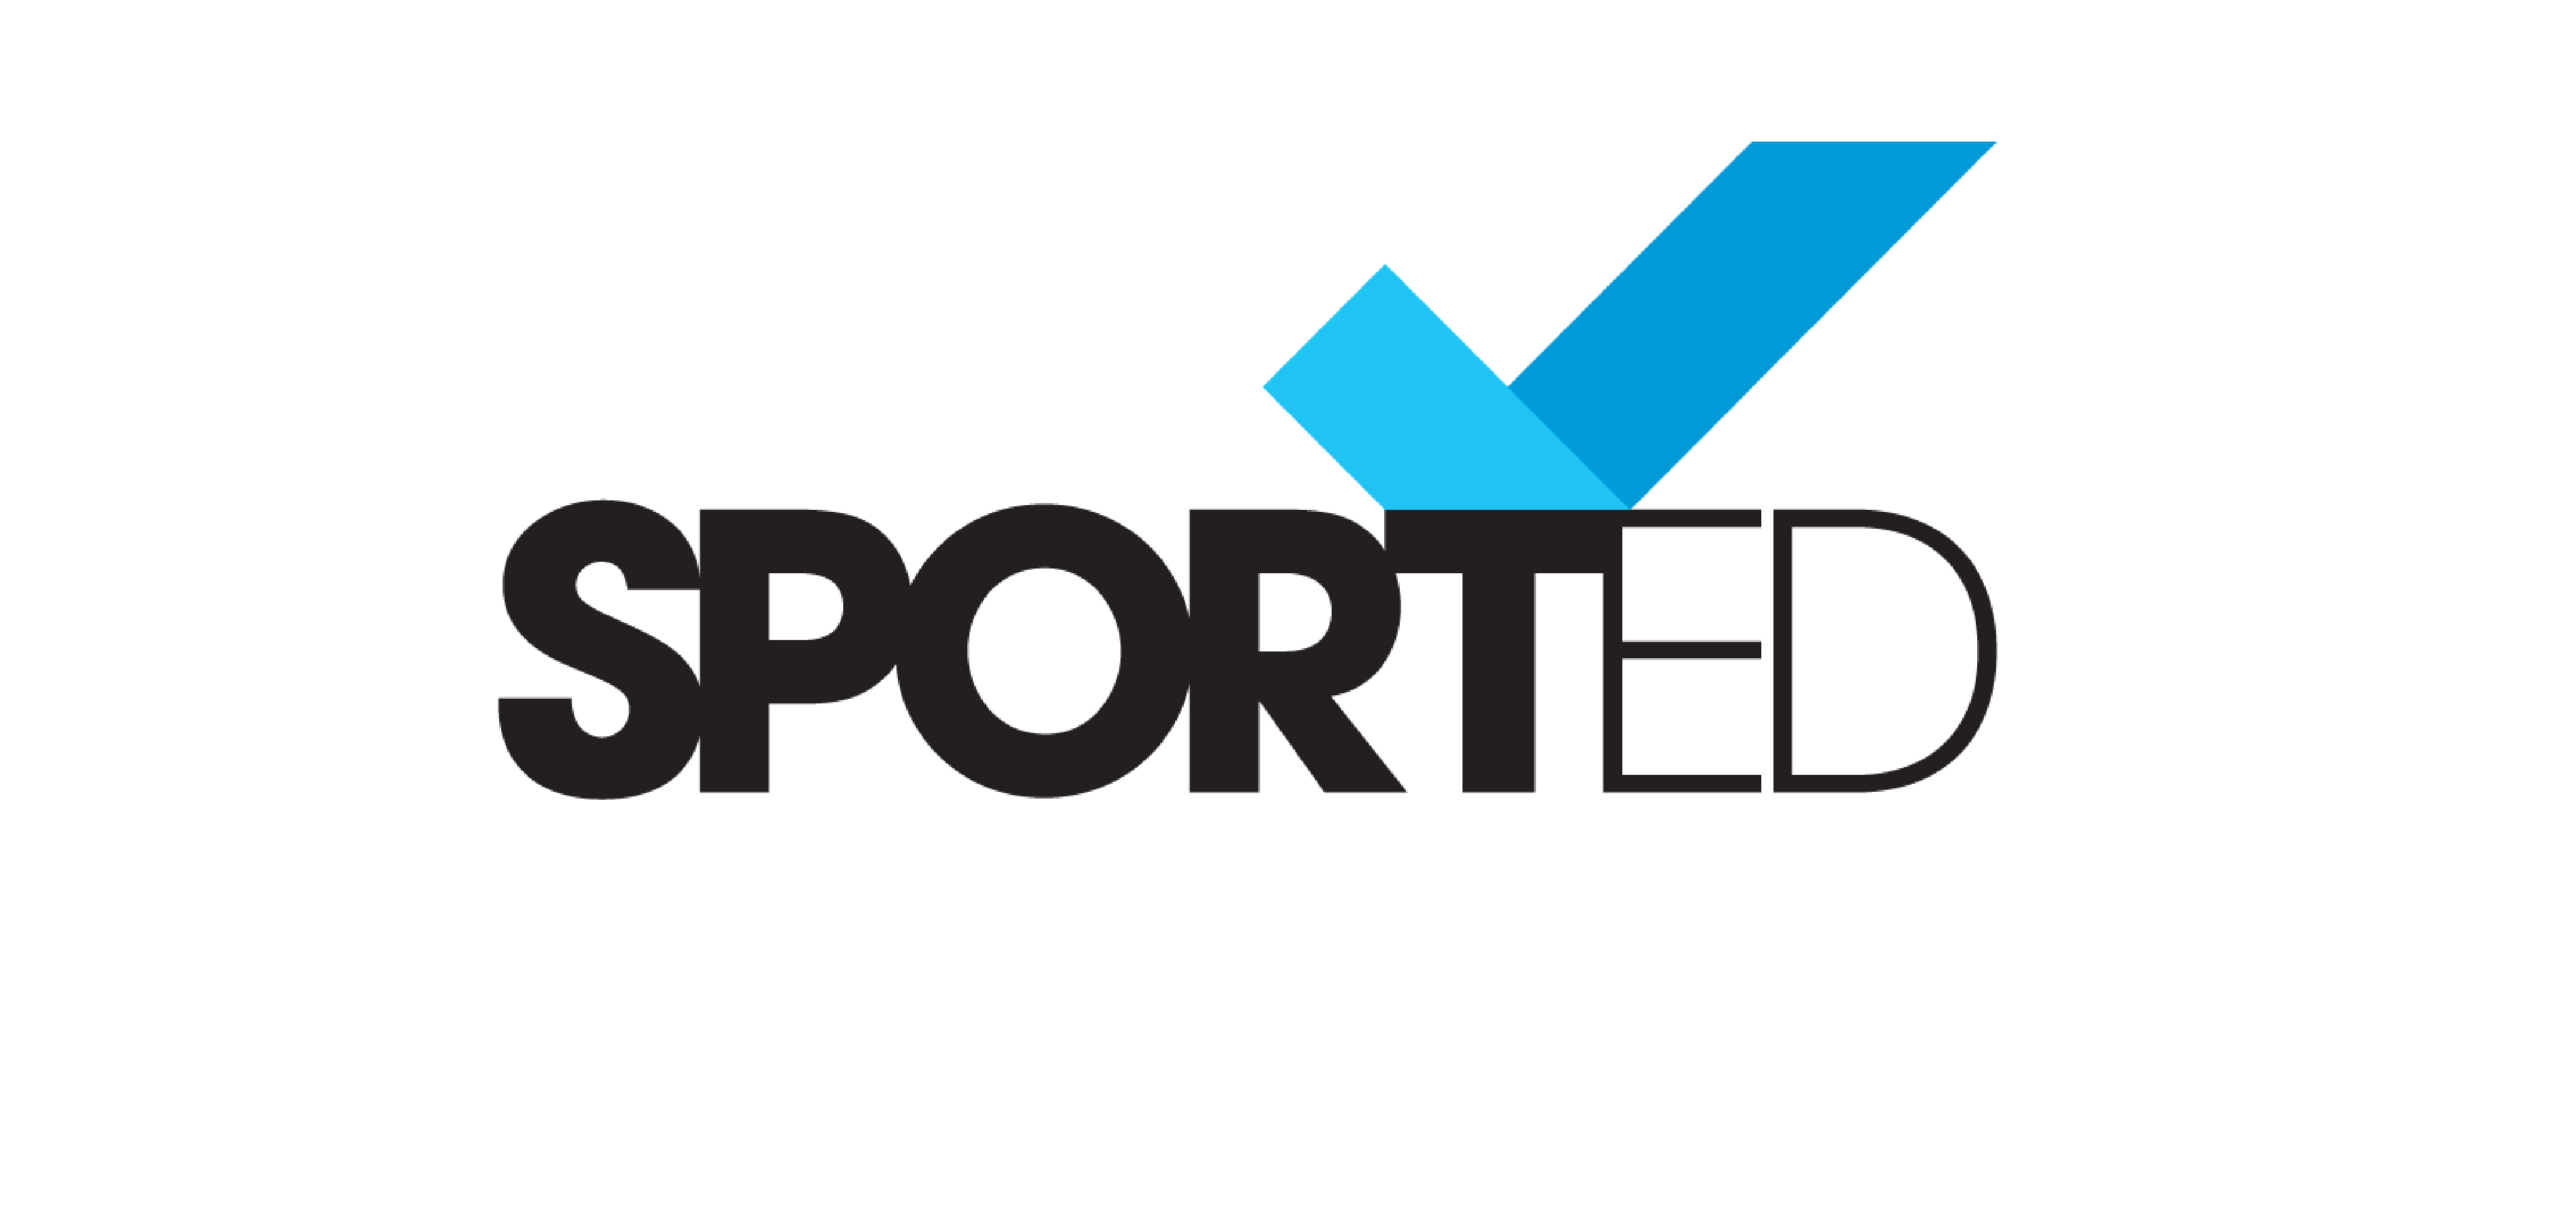 SportED Logo